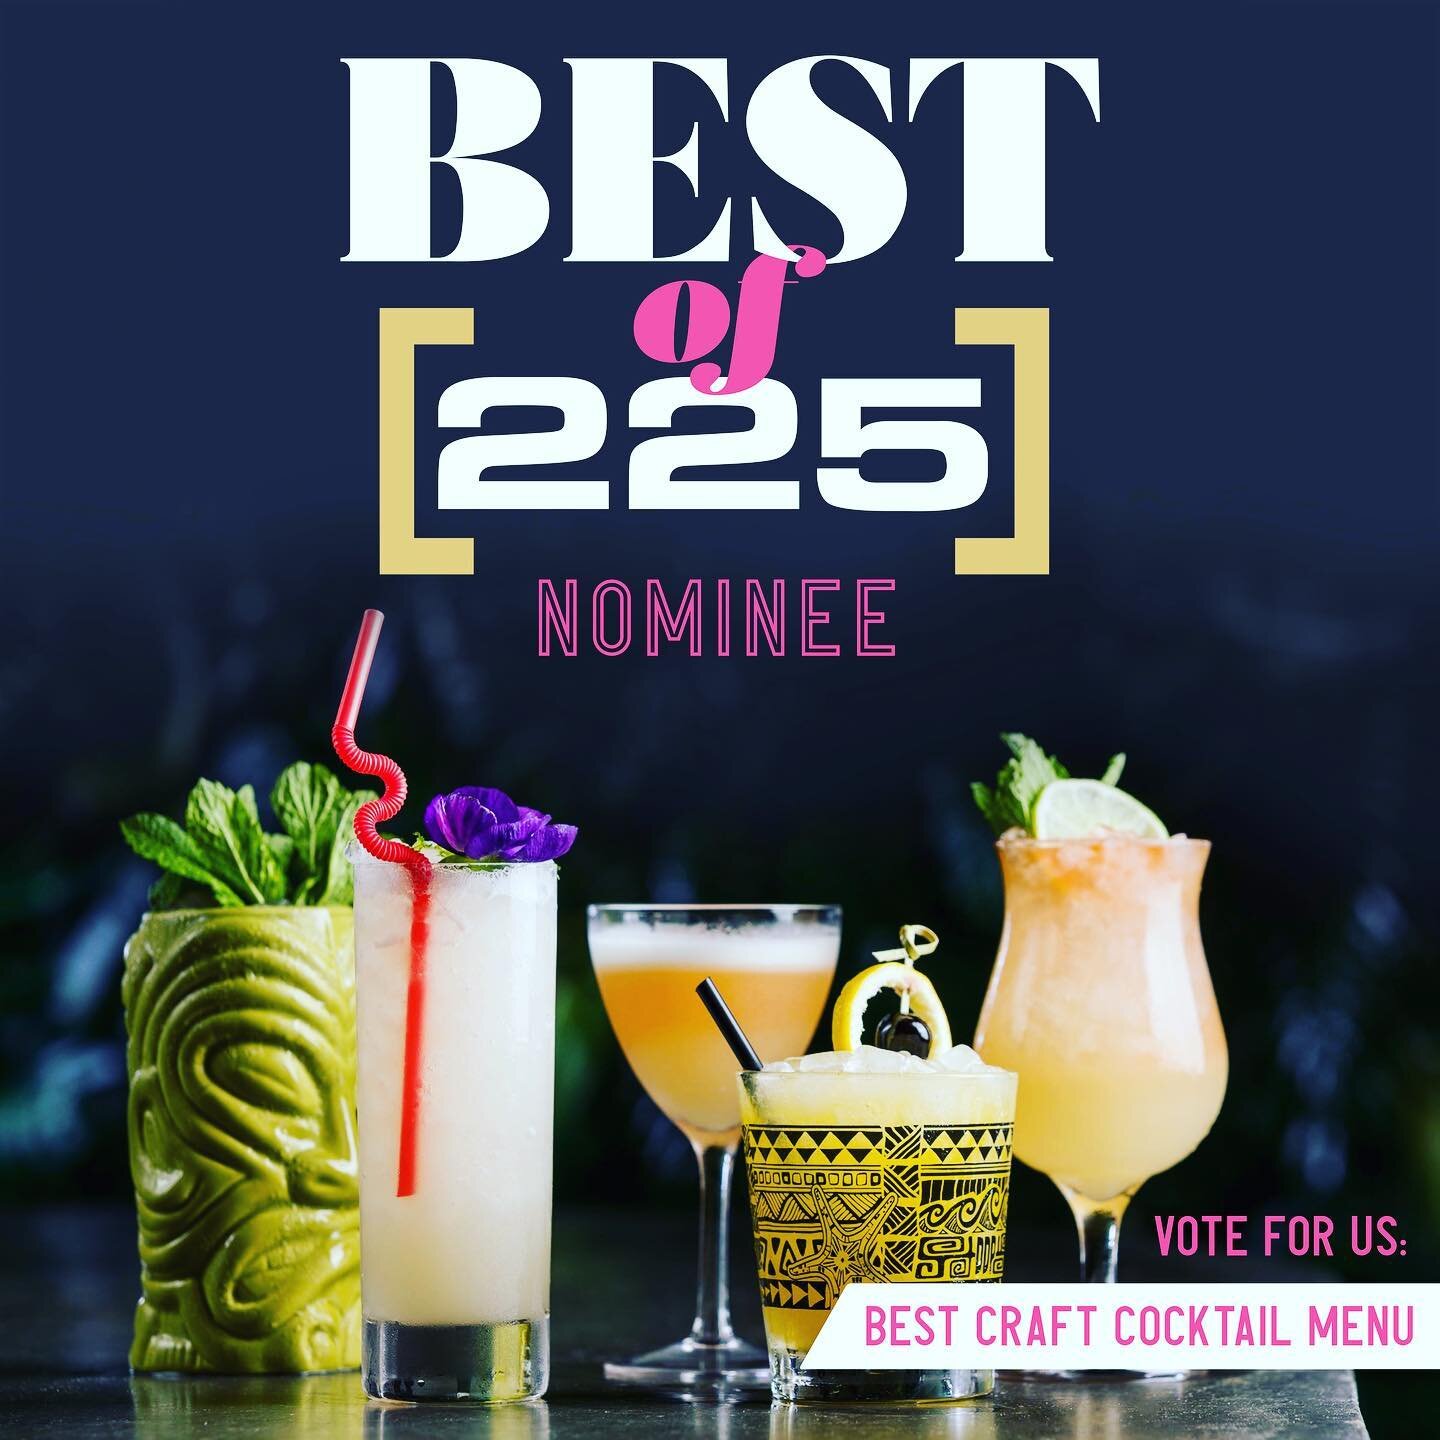 Last day to vote for @225batonrouge &ldquo;Best Of&rdquo; issue is tomorrow! Please, consider us for the below categories!

🧑🏼&zwj;🍳Best Chef @chef_thiennguyen 
🍹Best Craft Cocktail Menu
🍣Best Sushi @intrikiit 
🍜Best Vietnamese 

#eatsoji 
#eat